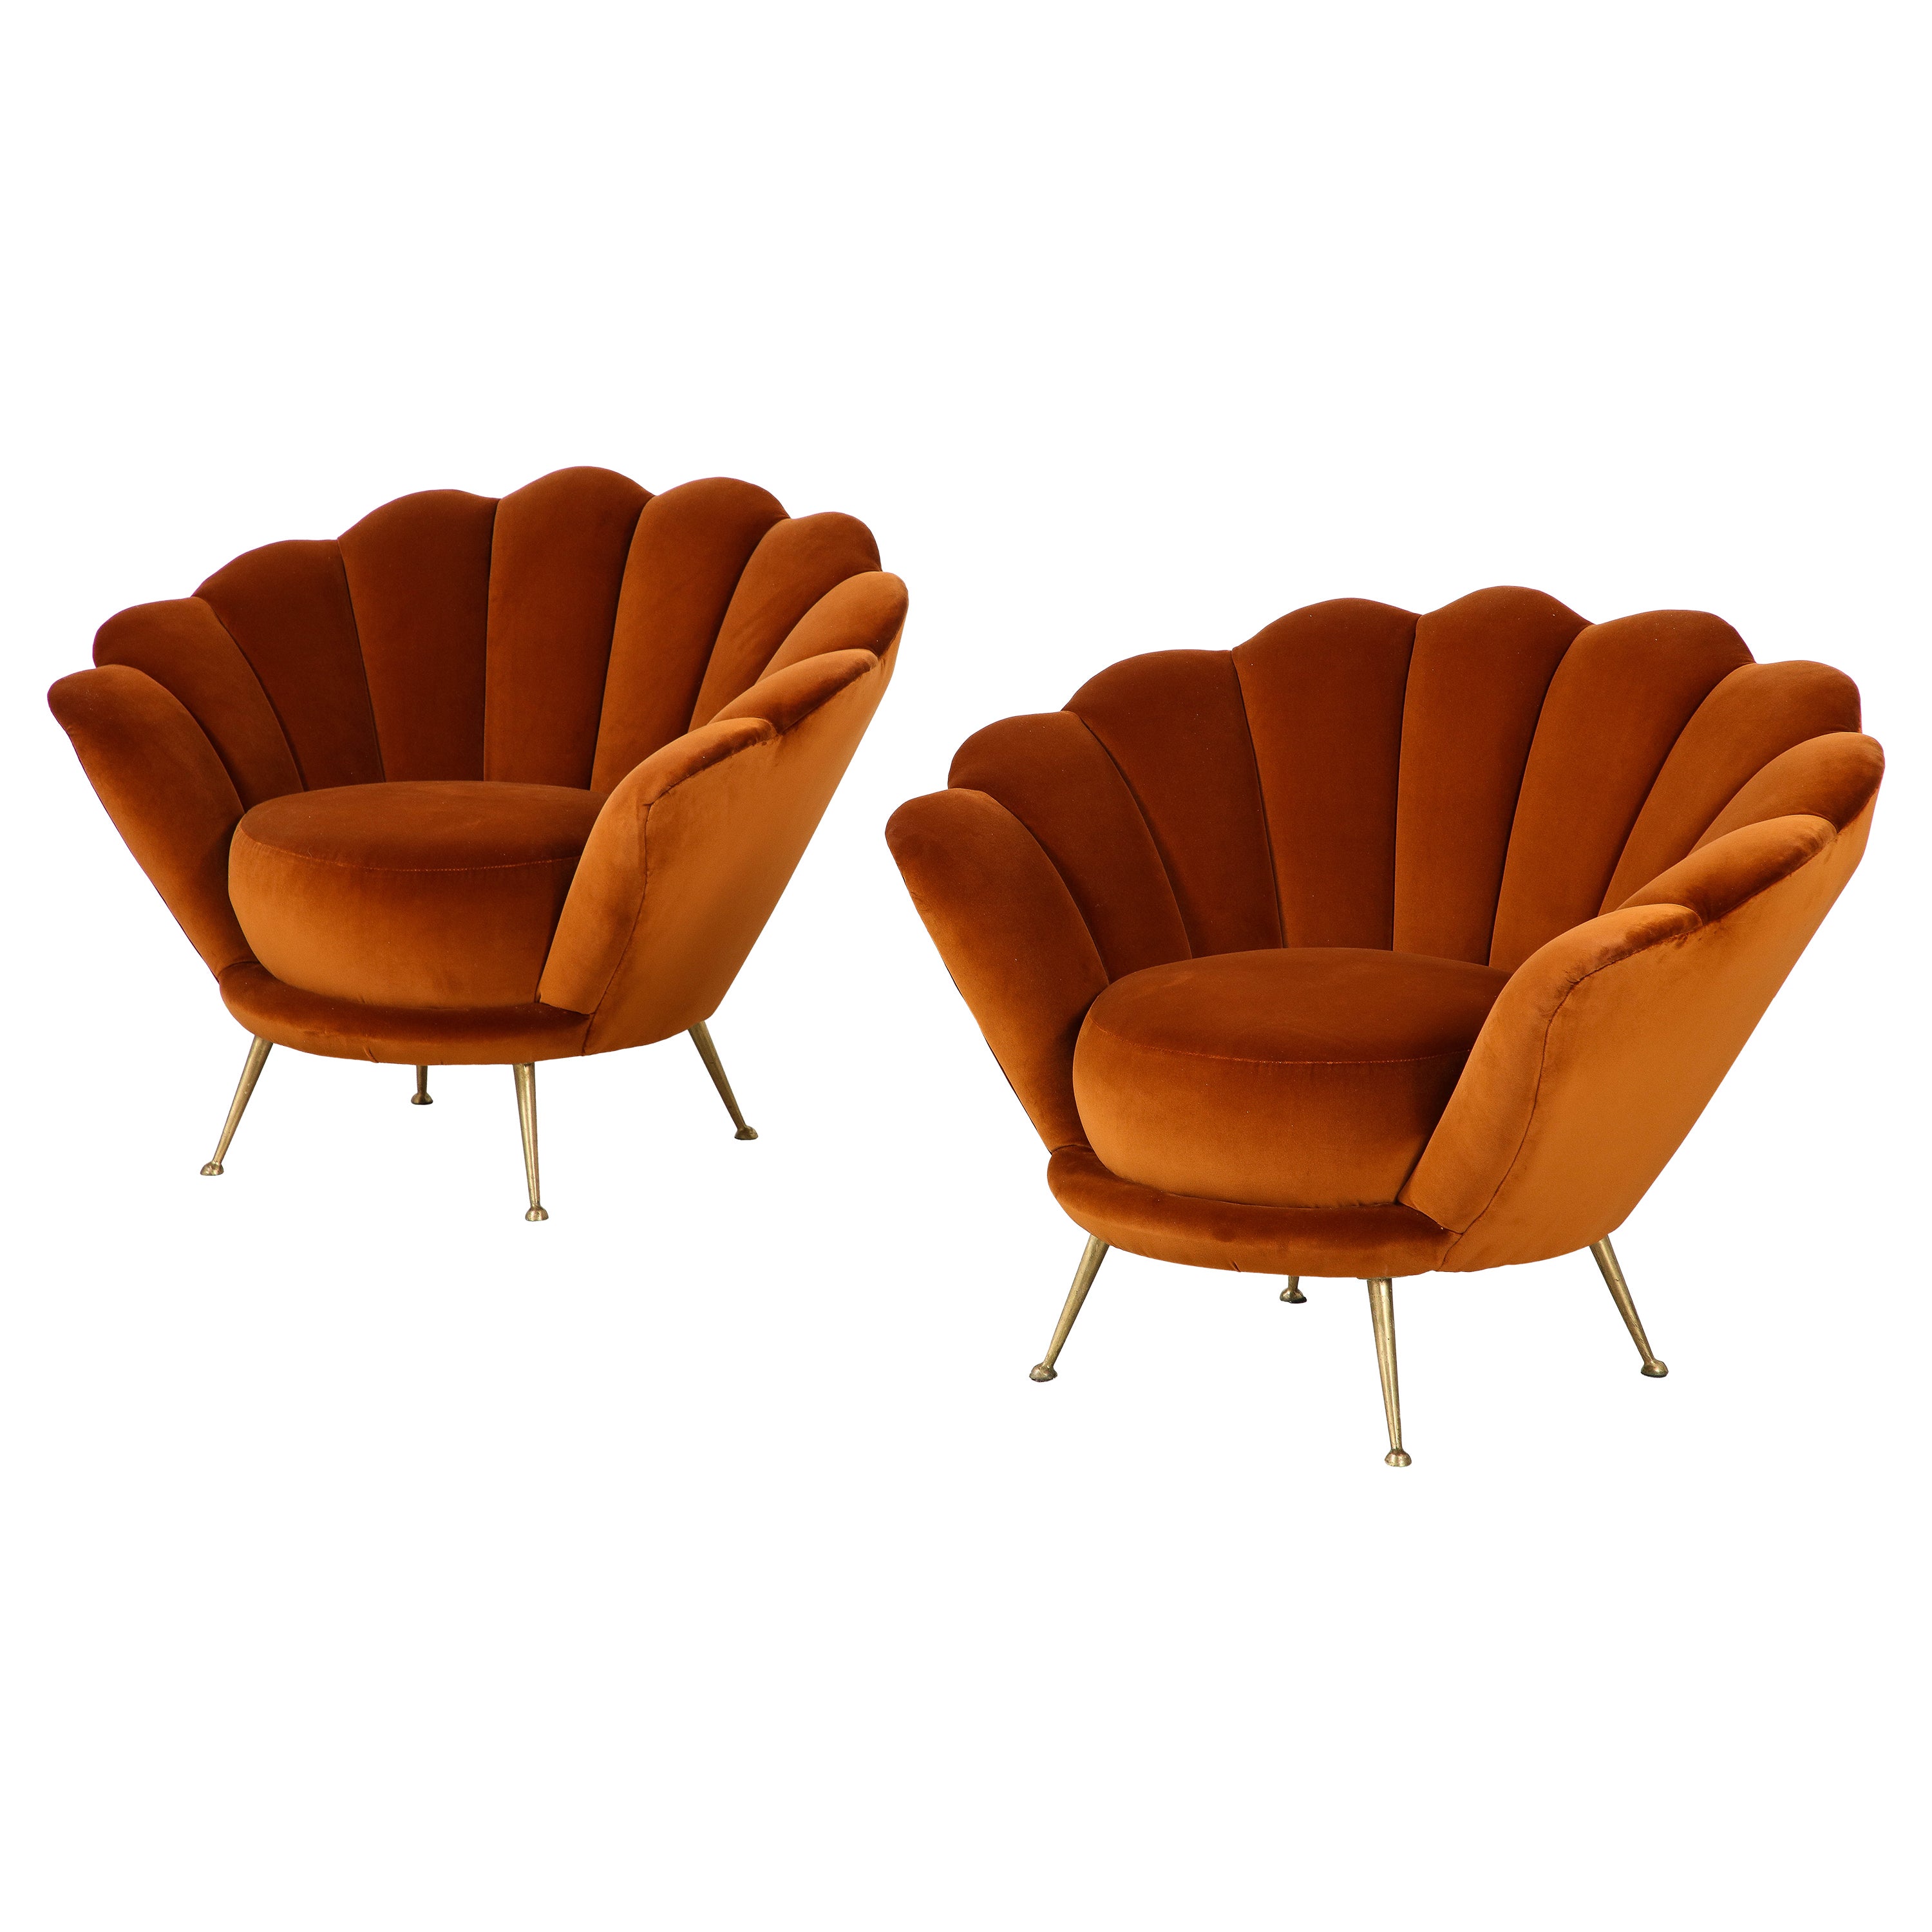 Pair of Italian 1950's Scalloped Shaped Velvet Lounge Chairs